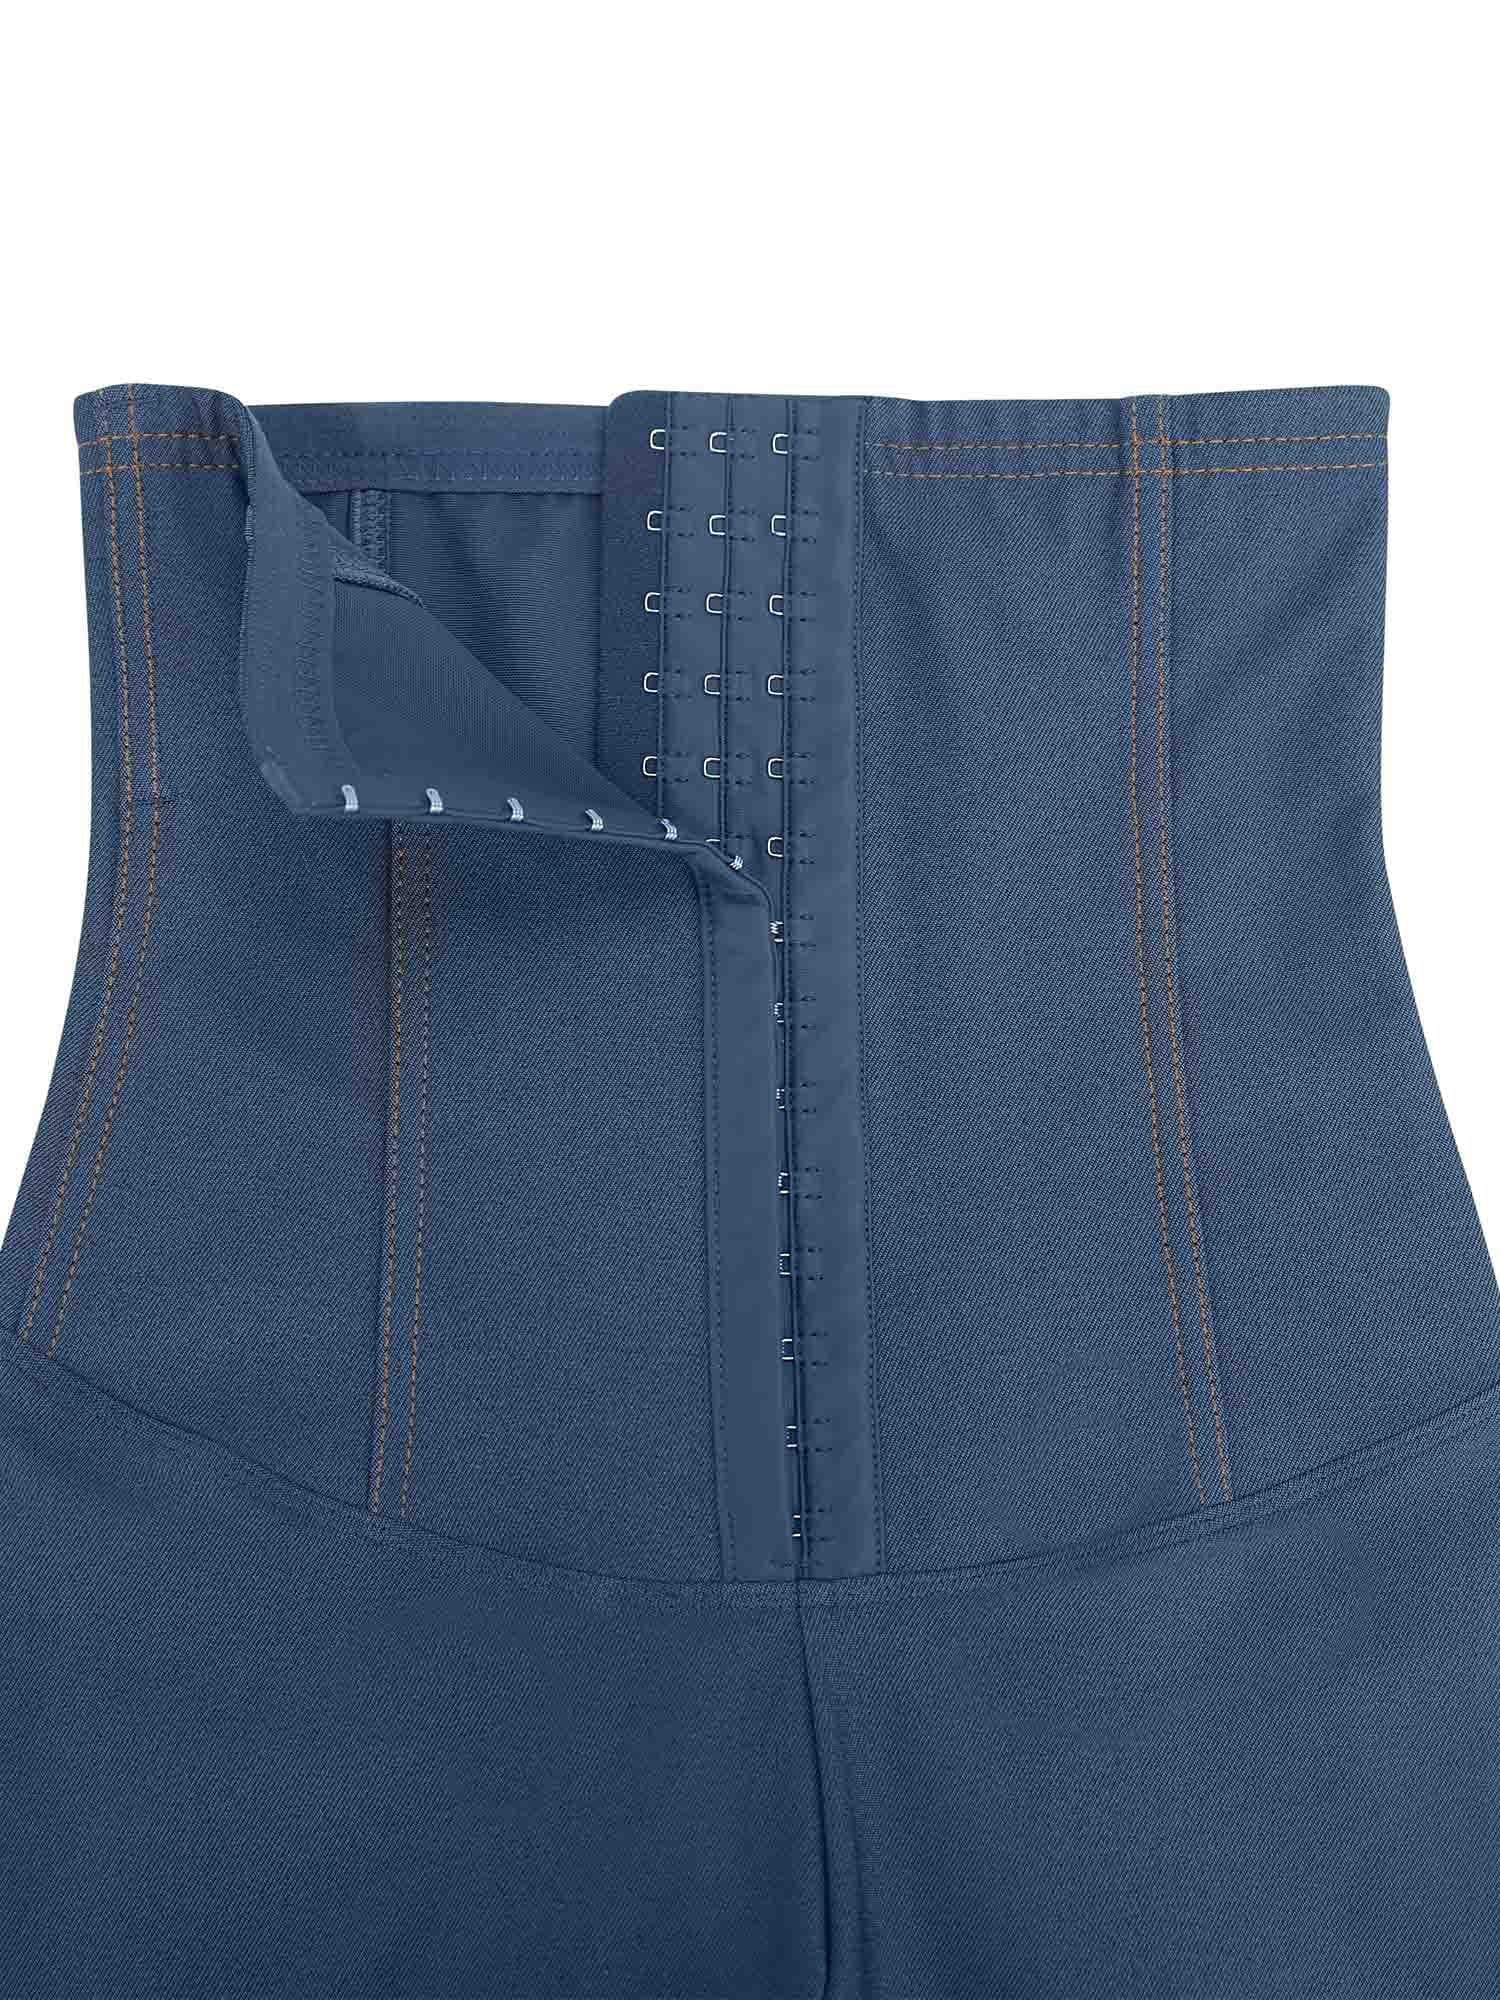 MAWCLOS Ladies Plus Size Leggings High Waist Faux Denim Pant Tummy Control  Fake Jeans Soft Workout Skinny Pencil Pants Blue 3XL 